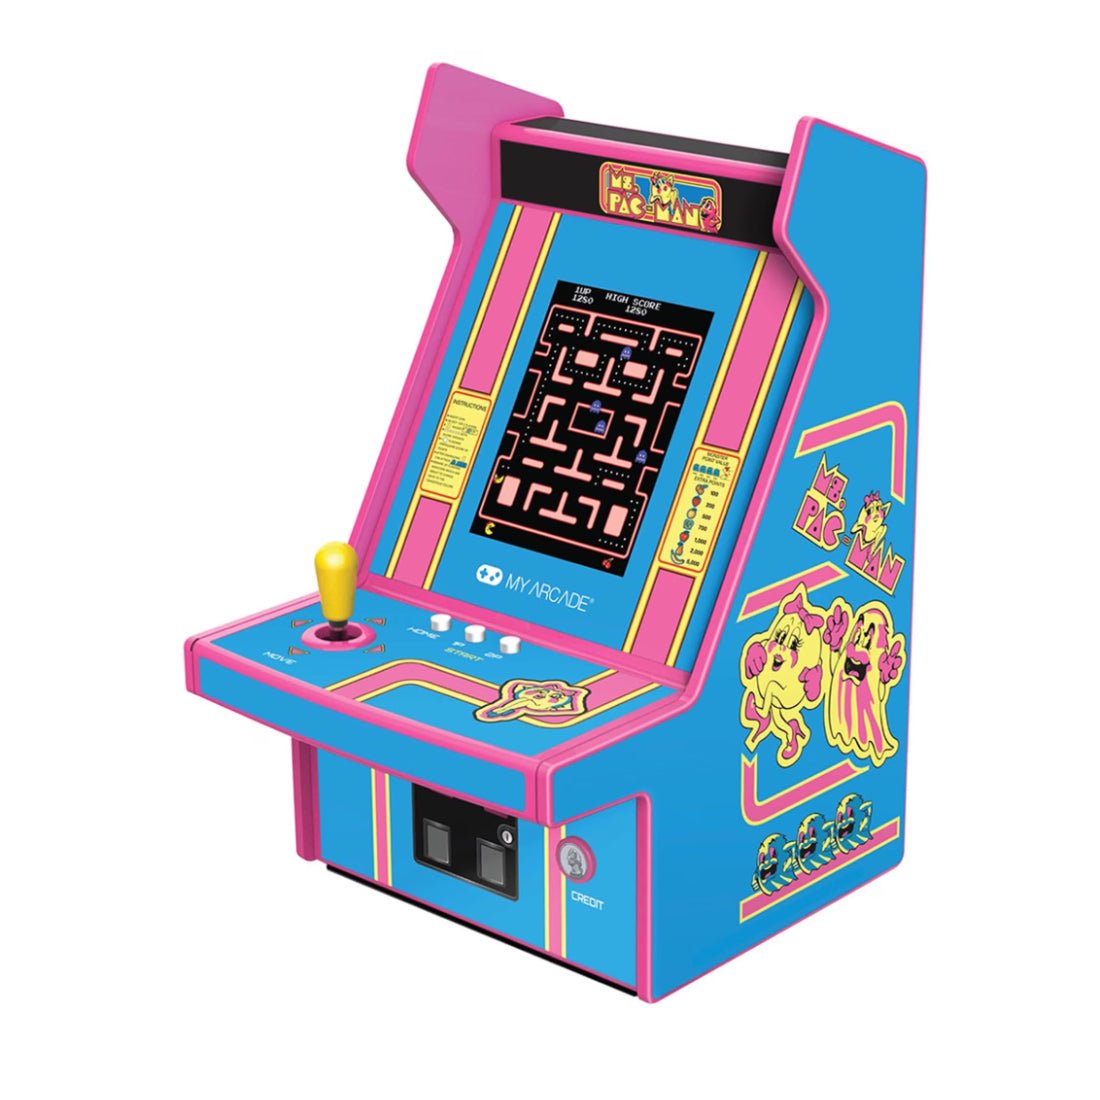 My Arcade MS.Pac-man Micro Player Pro Game Arcade - Blue & Pink - جهاز ألعاب - Store 974 | ستور ٩٧٤